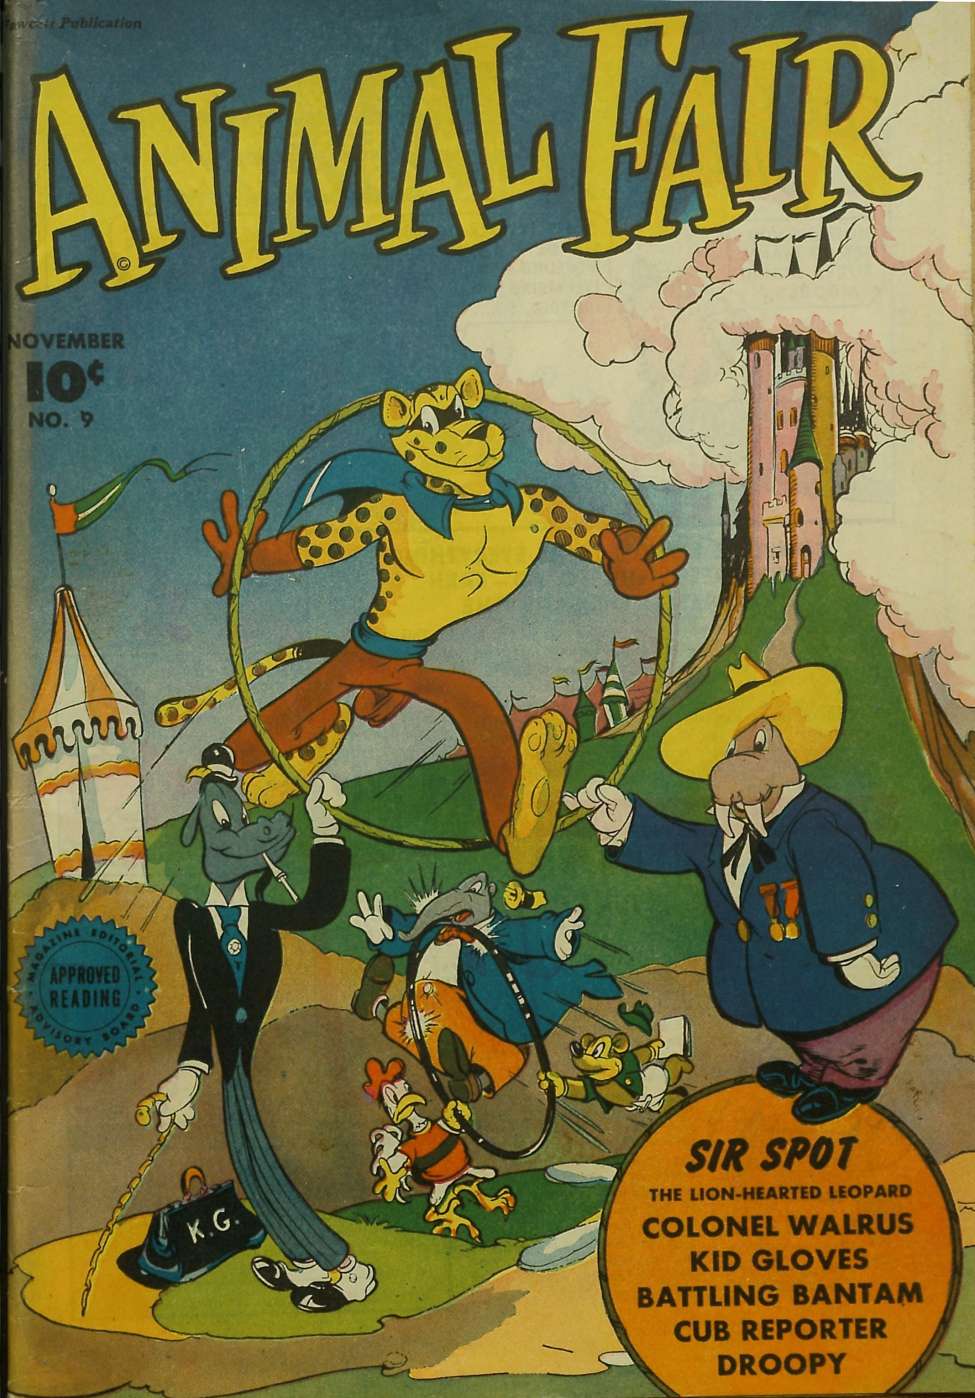 Comic Book Cover For Animal Fair 9 (paper/2fiche) - Version 2